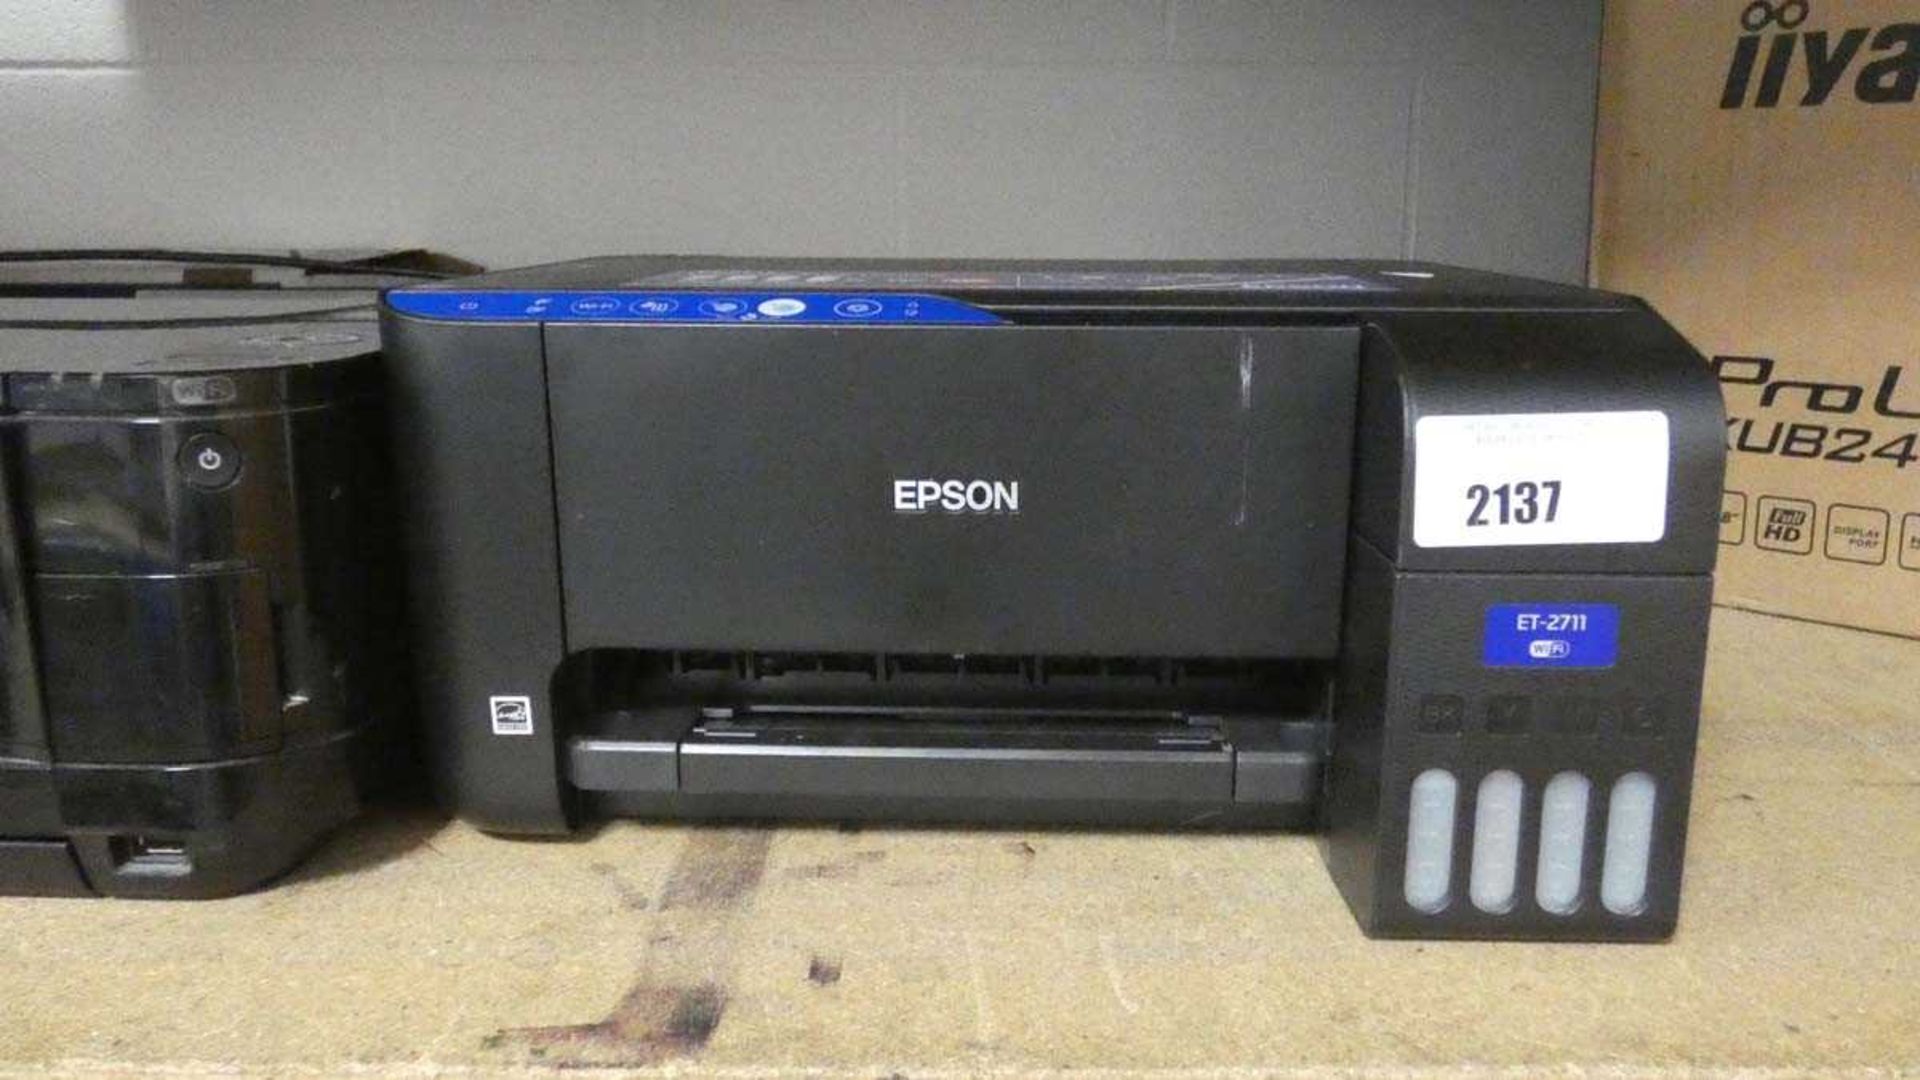 +VAT Epson EcoTank ET2711 printer